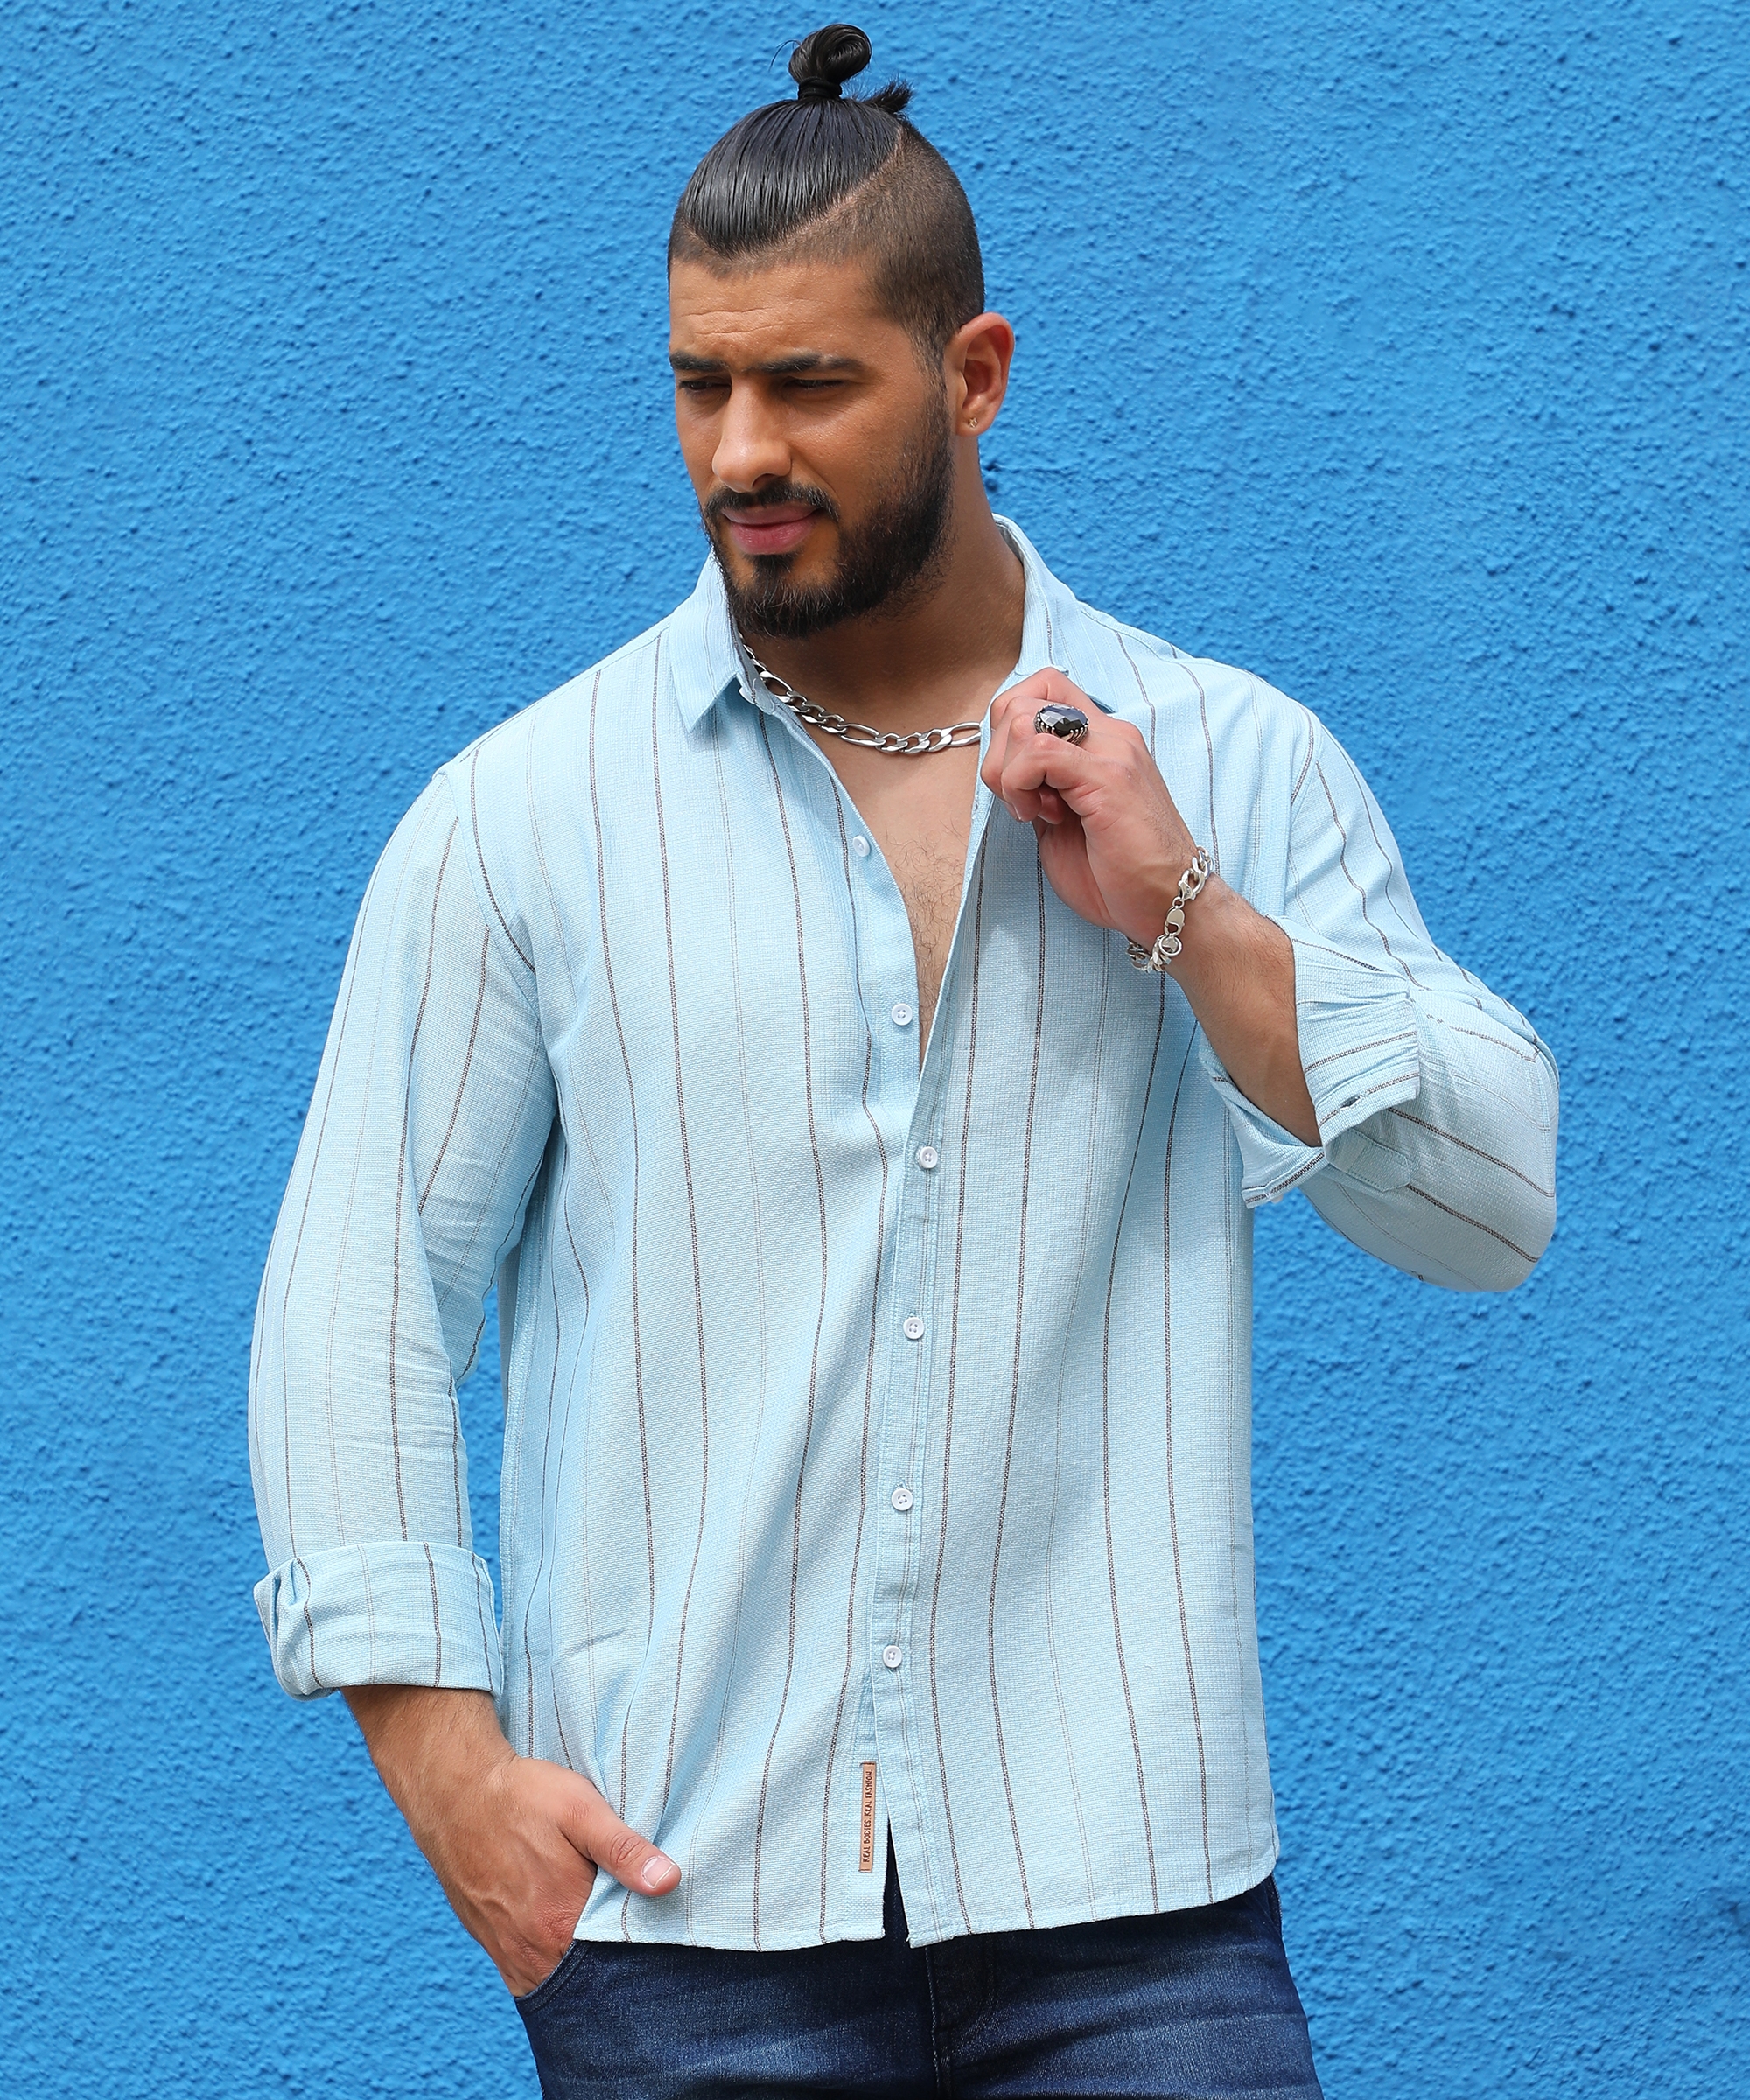 Instafab Plus | Men's Light Blue Contrast Pinstriped Shirt